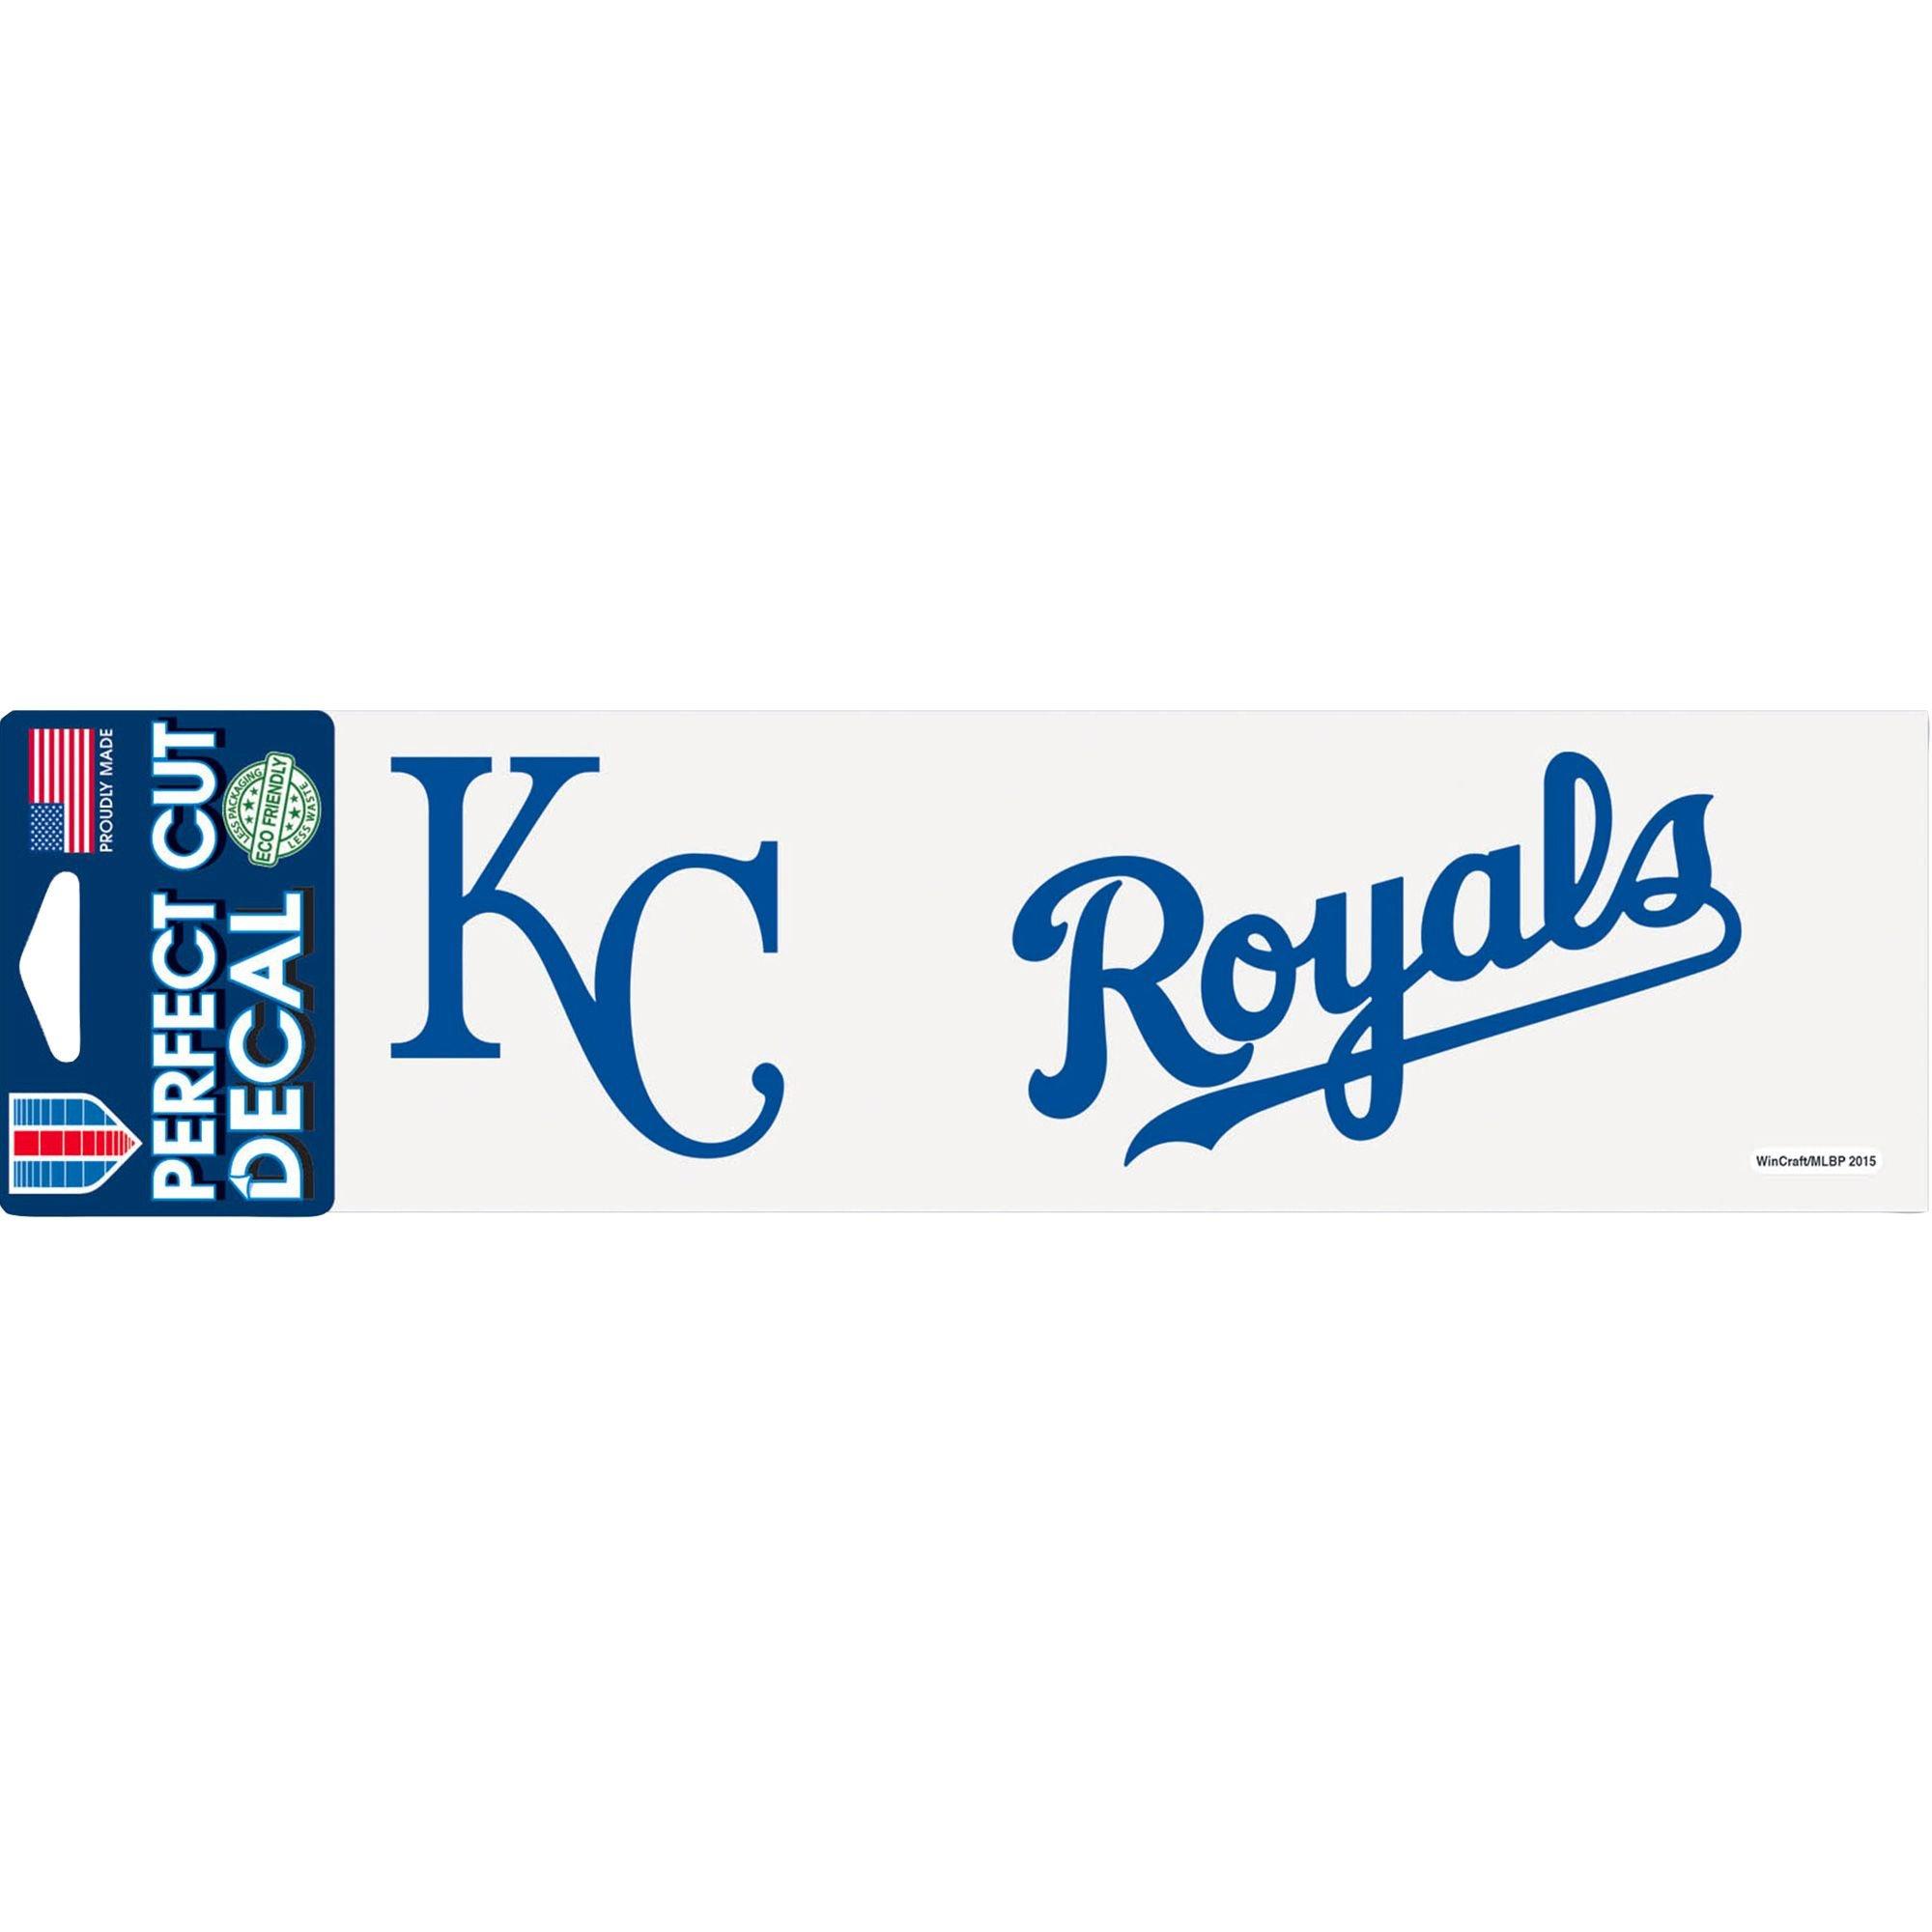 Official Kansas City Royals Big & Tall Apparel, Royals Plus Size